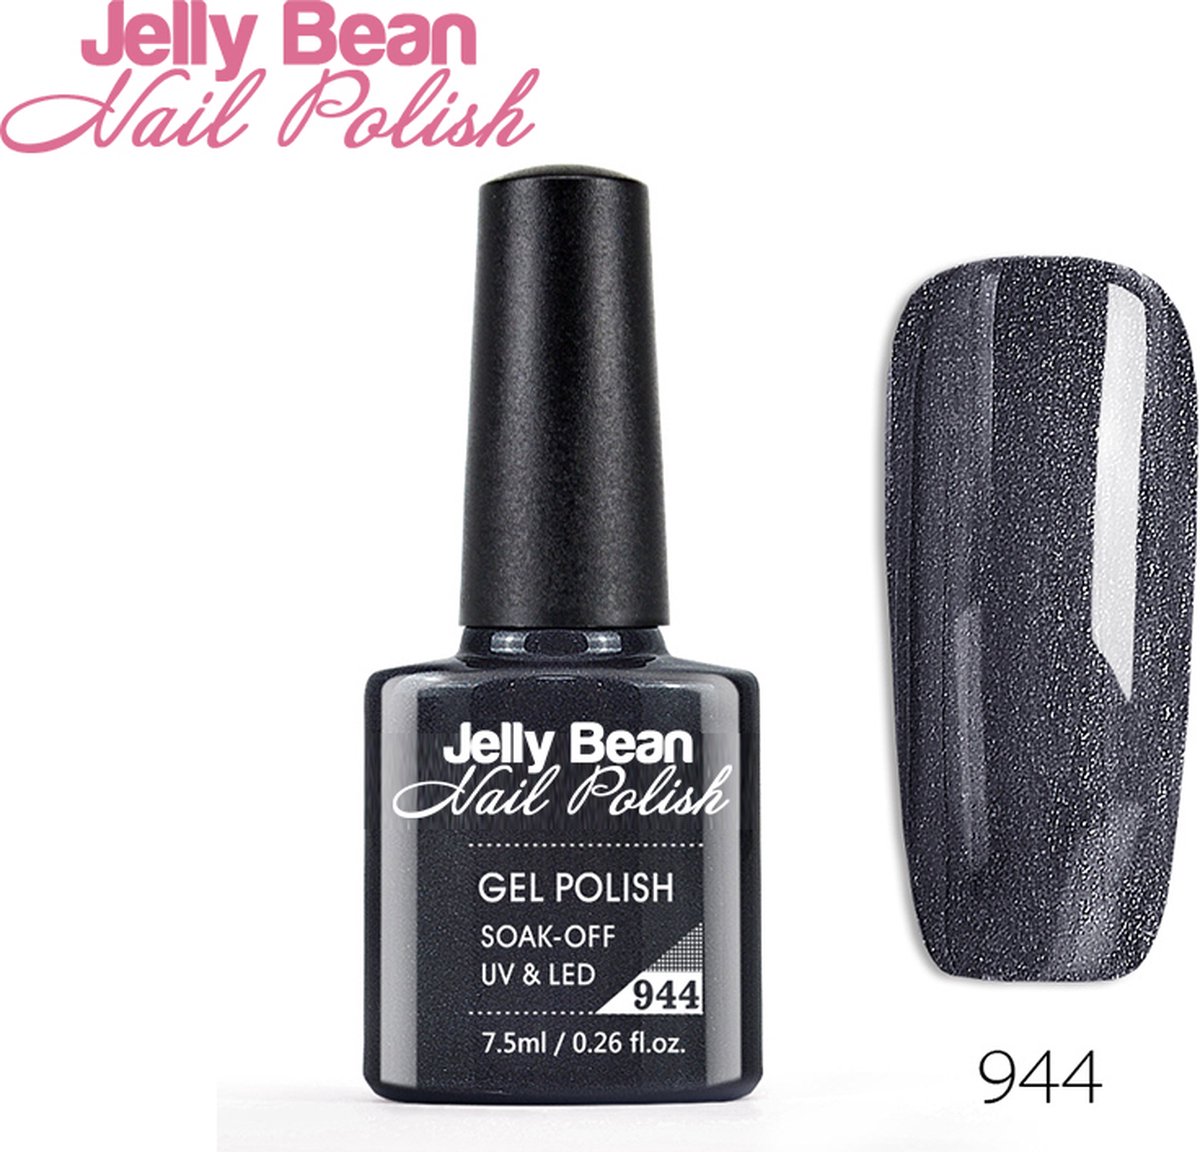 Jelly Bean Nail Polish UV gelnagellak 944